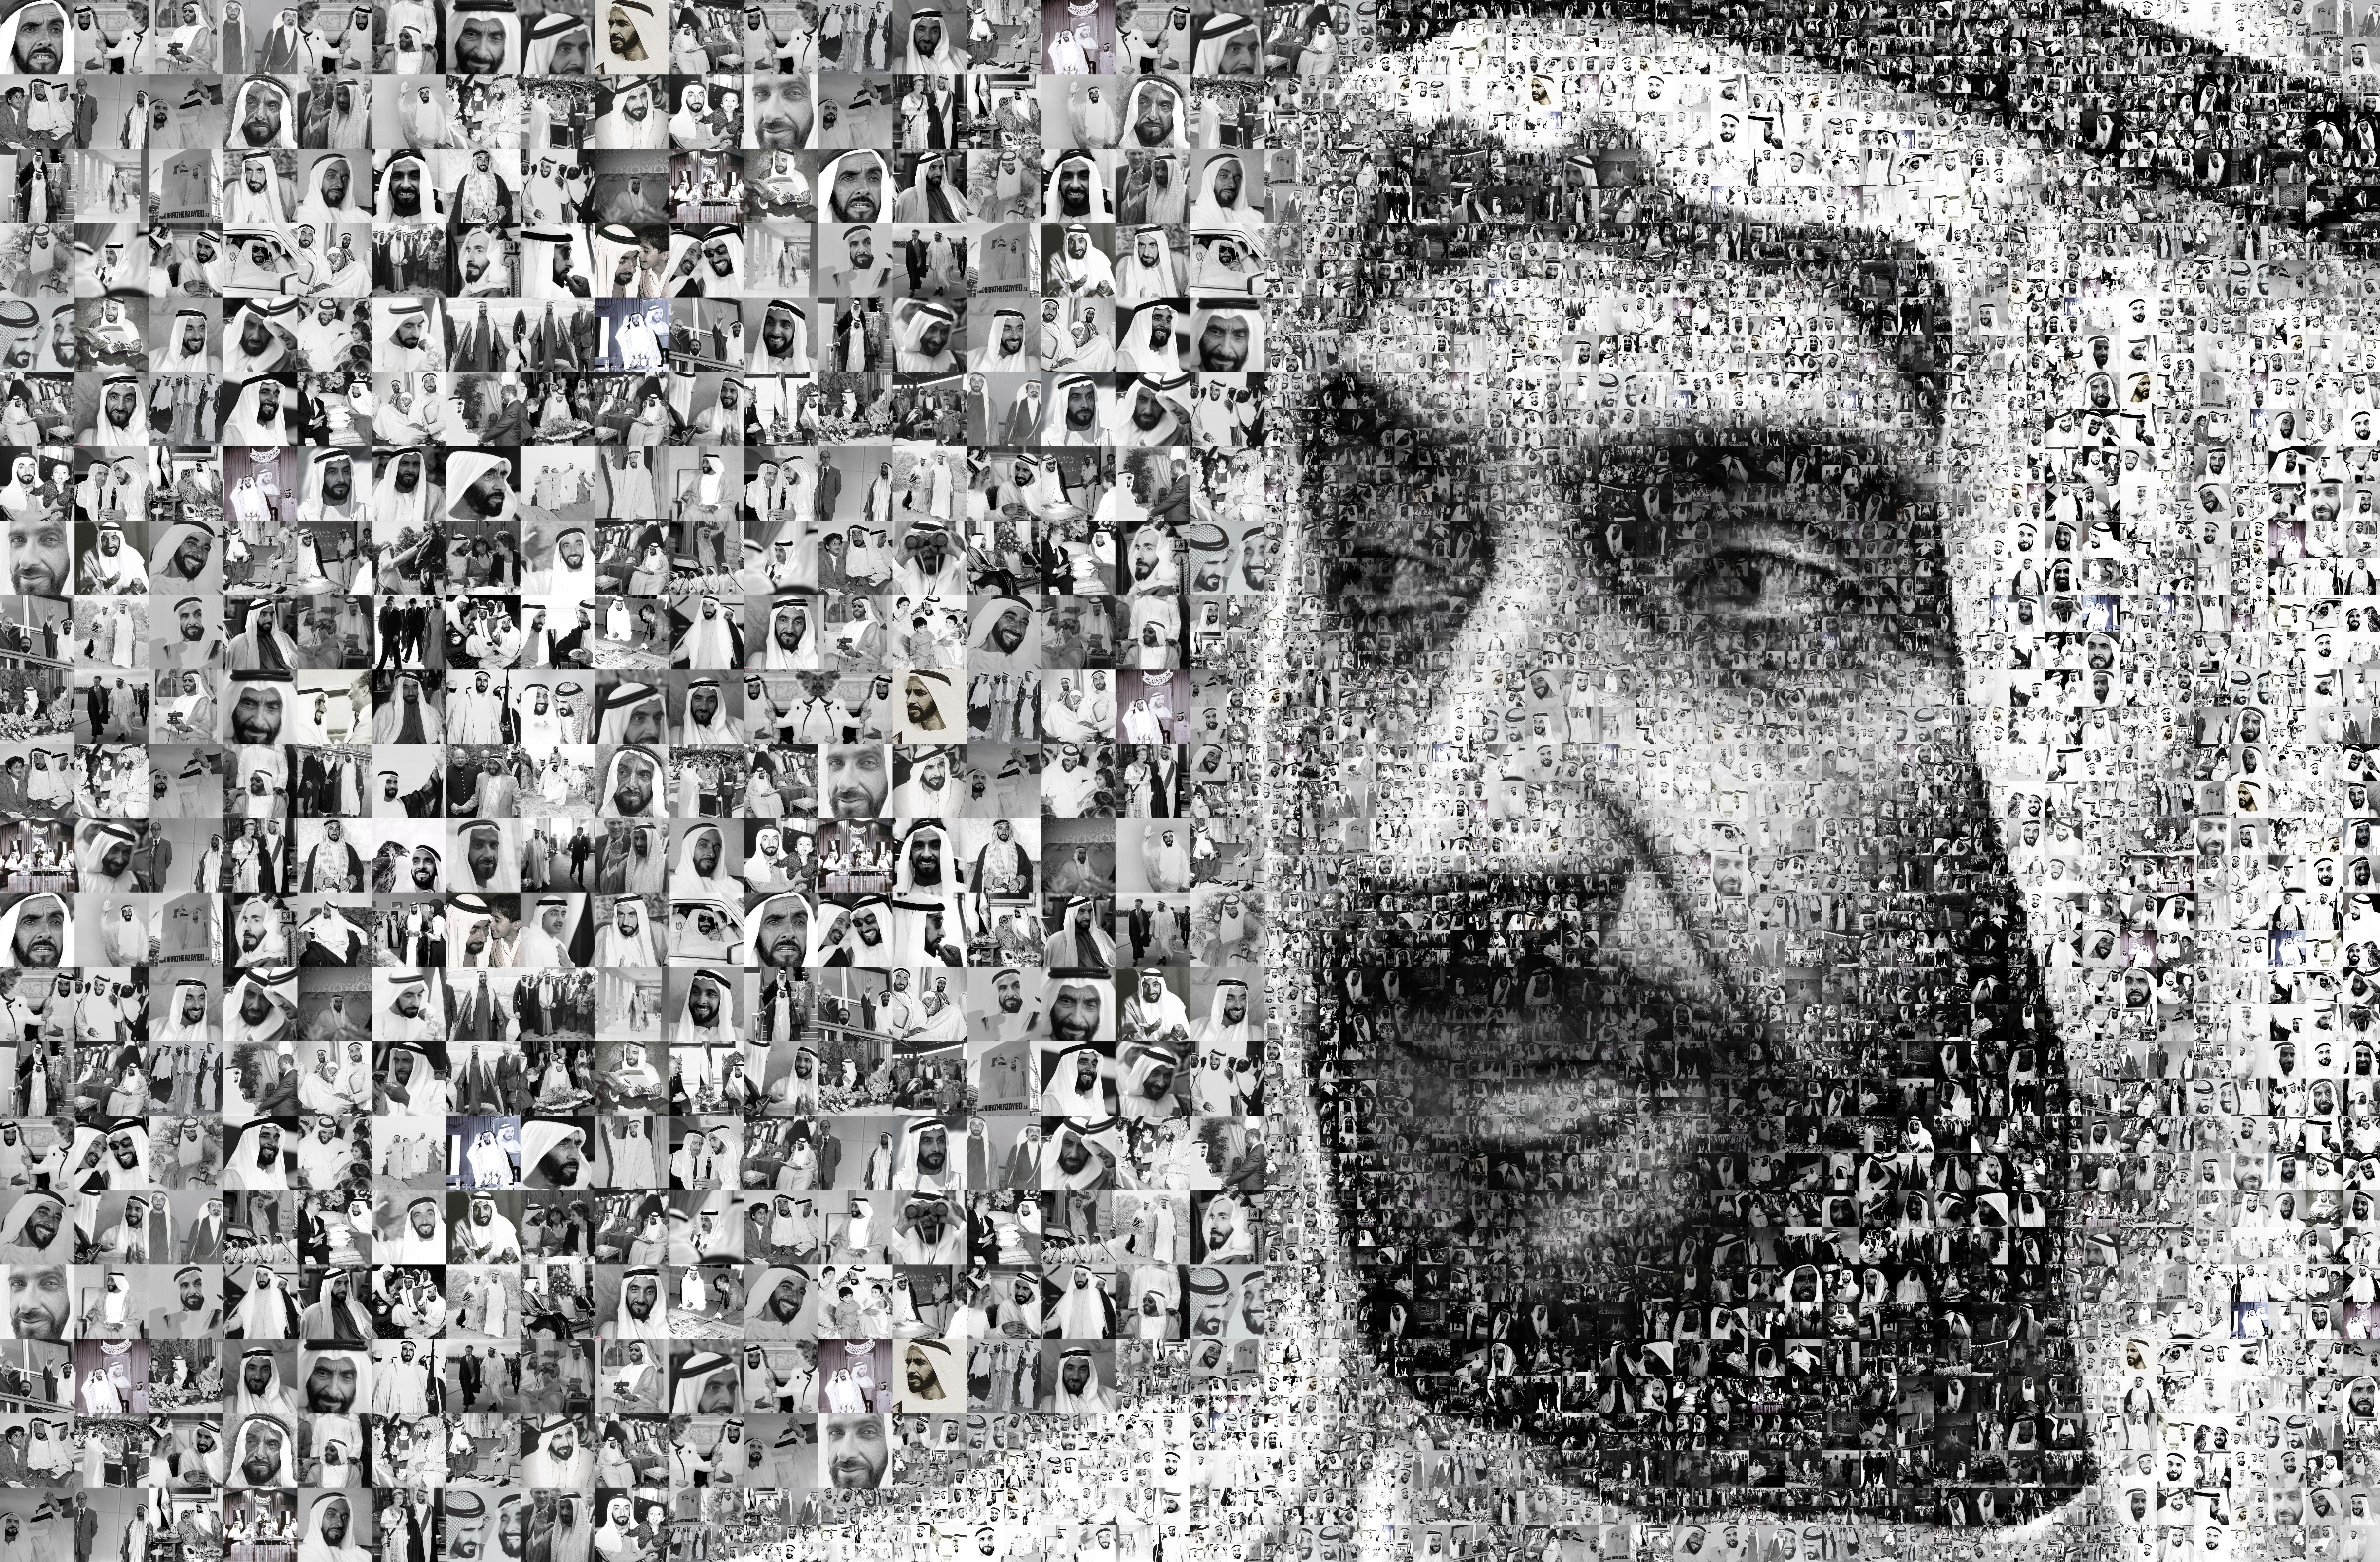 "The Founder" Sheikh Zayed Bin Sultan AlNahyan